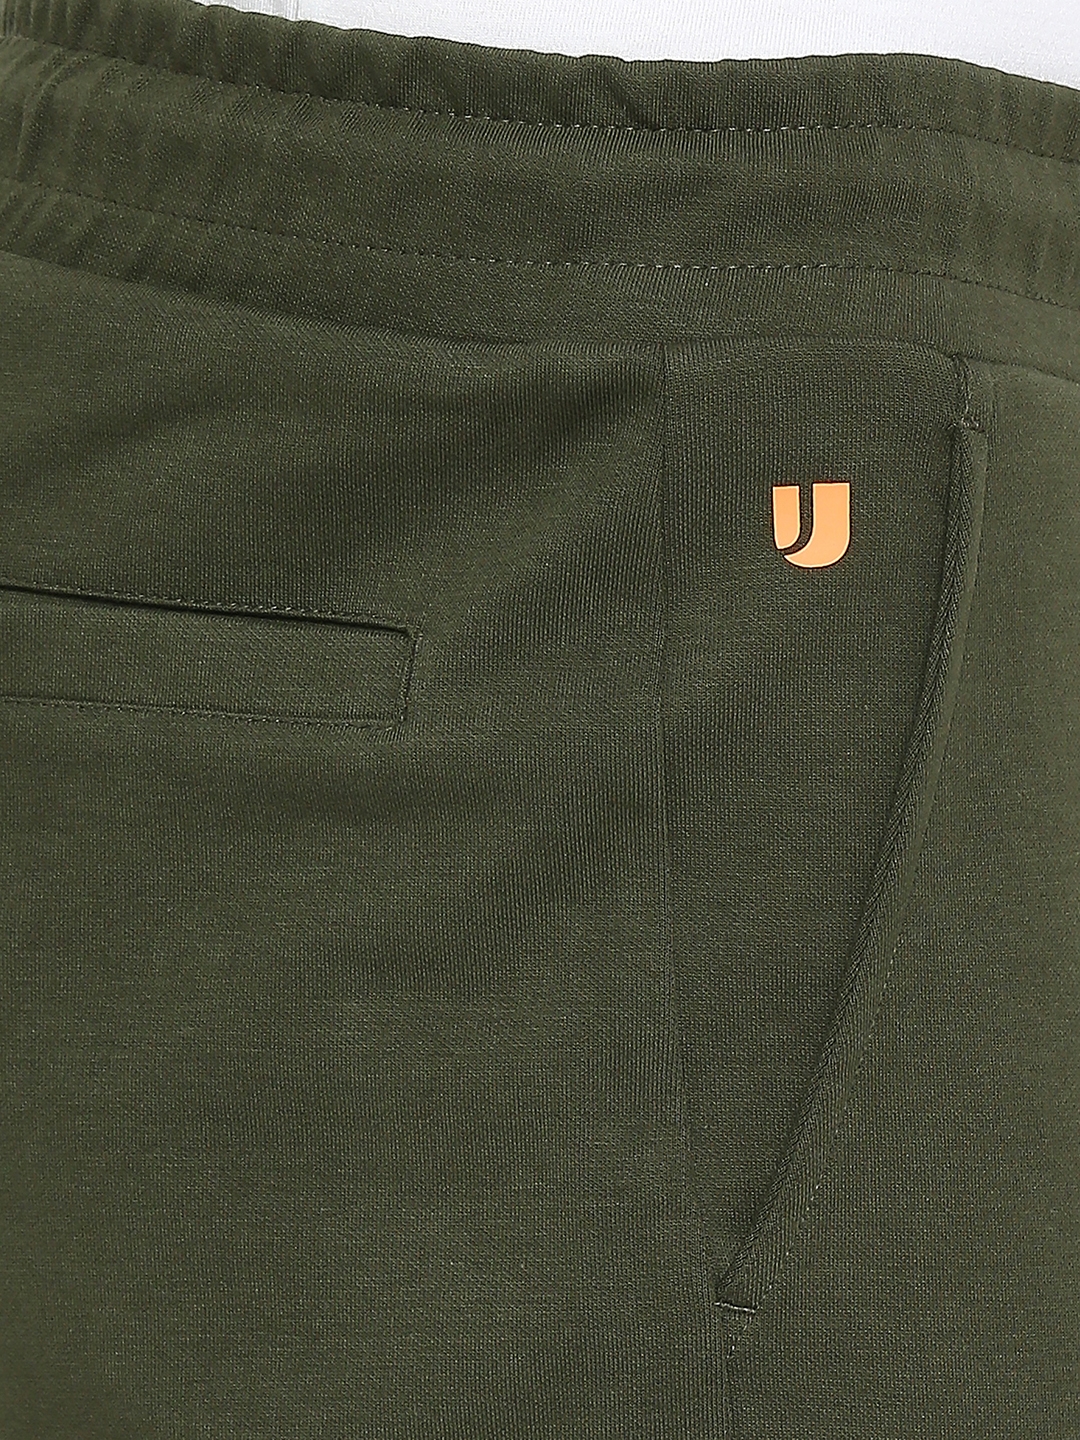 Underjeans by Spykar Men Knitted Rifle Green Cotton Pyjama